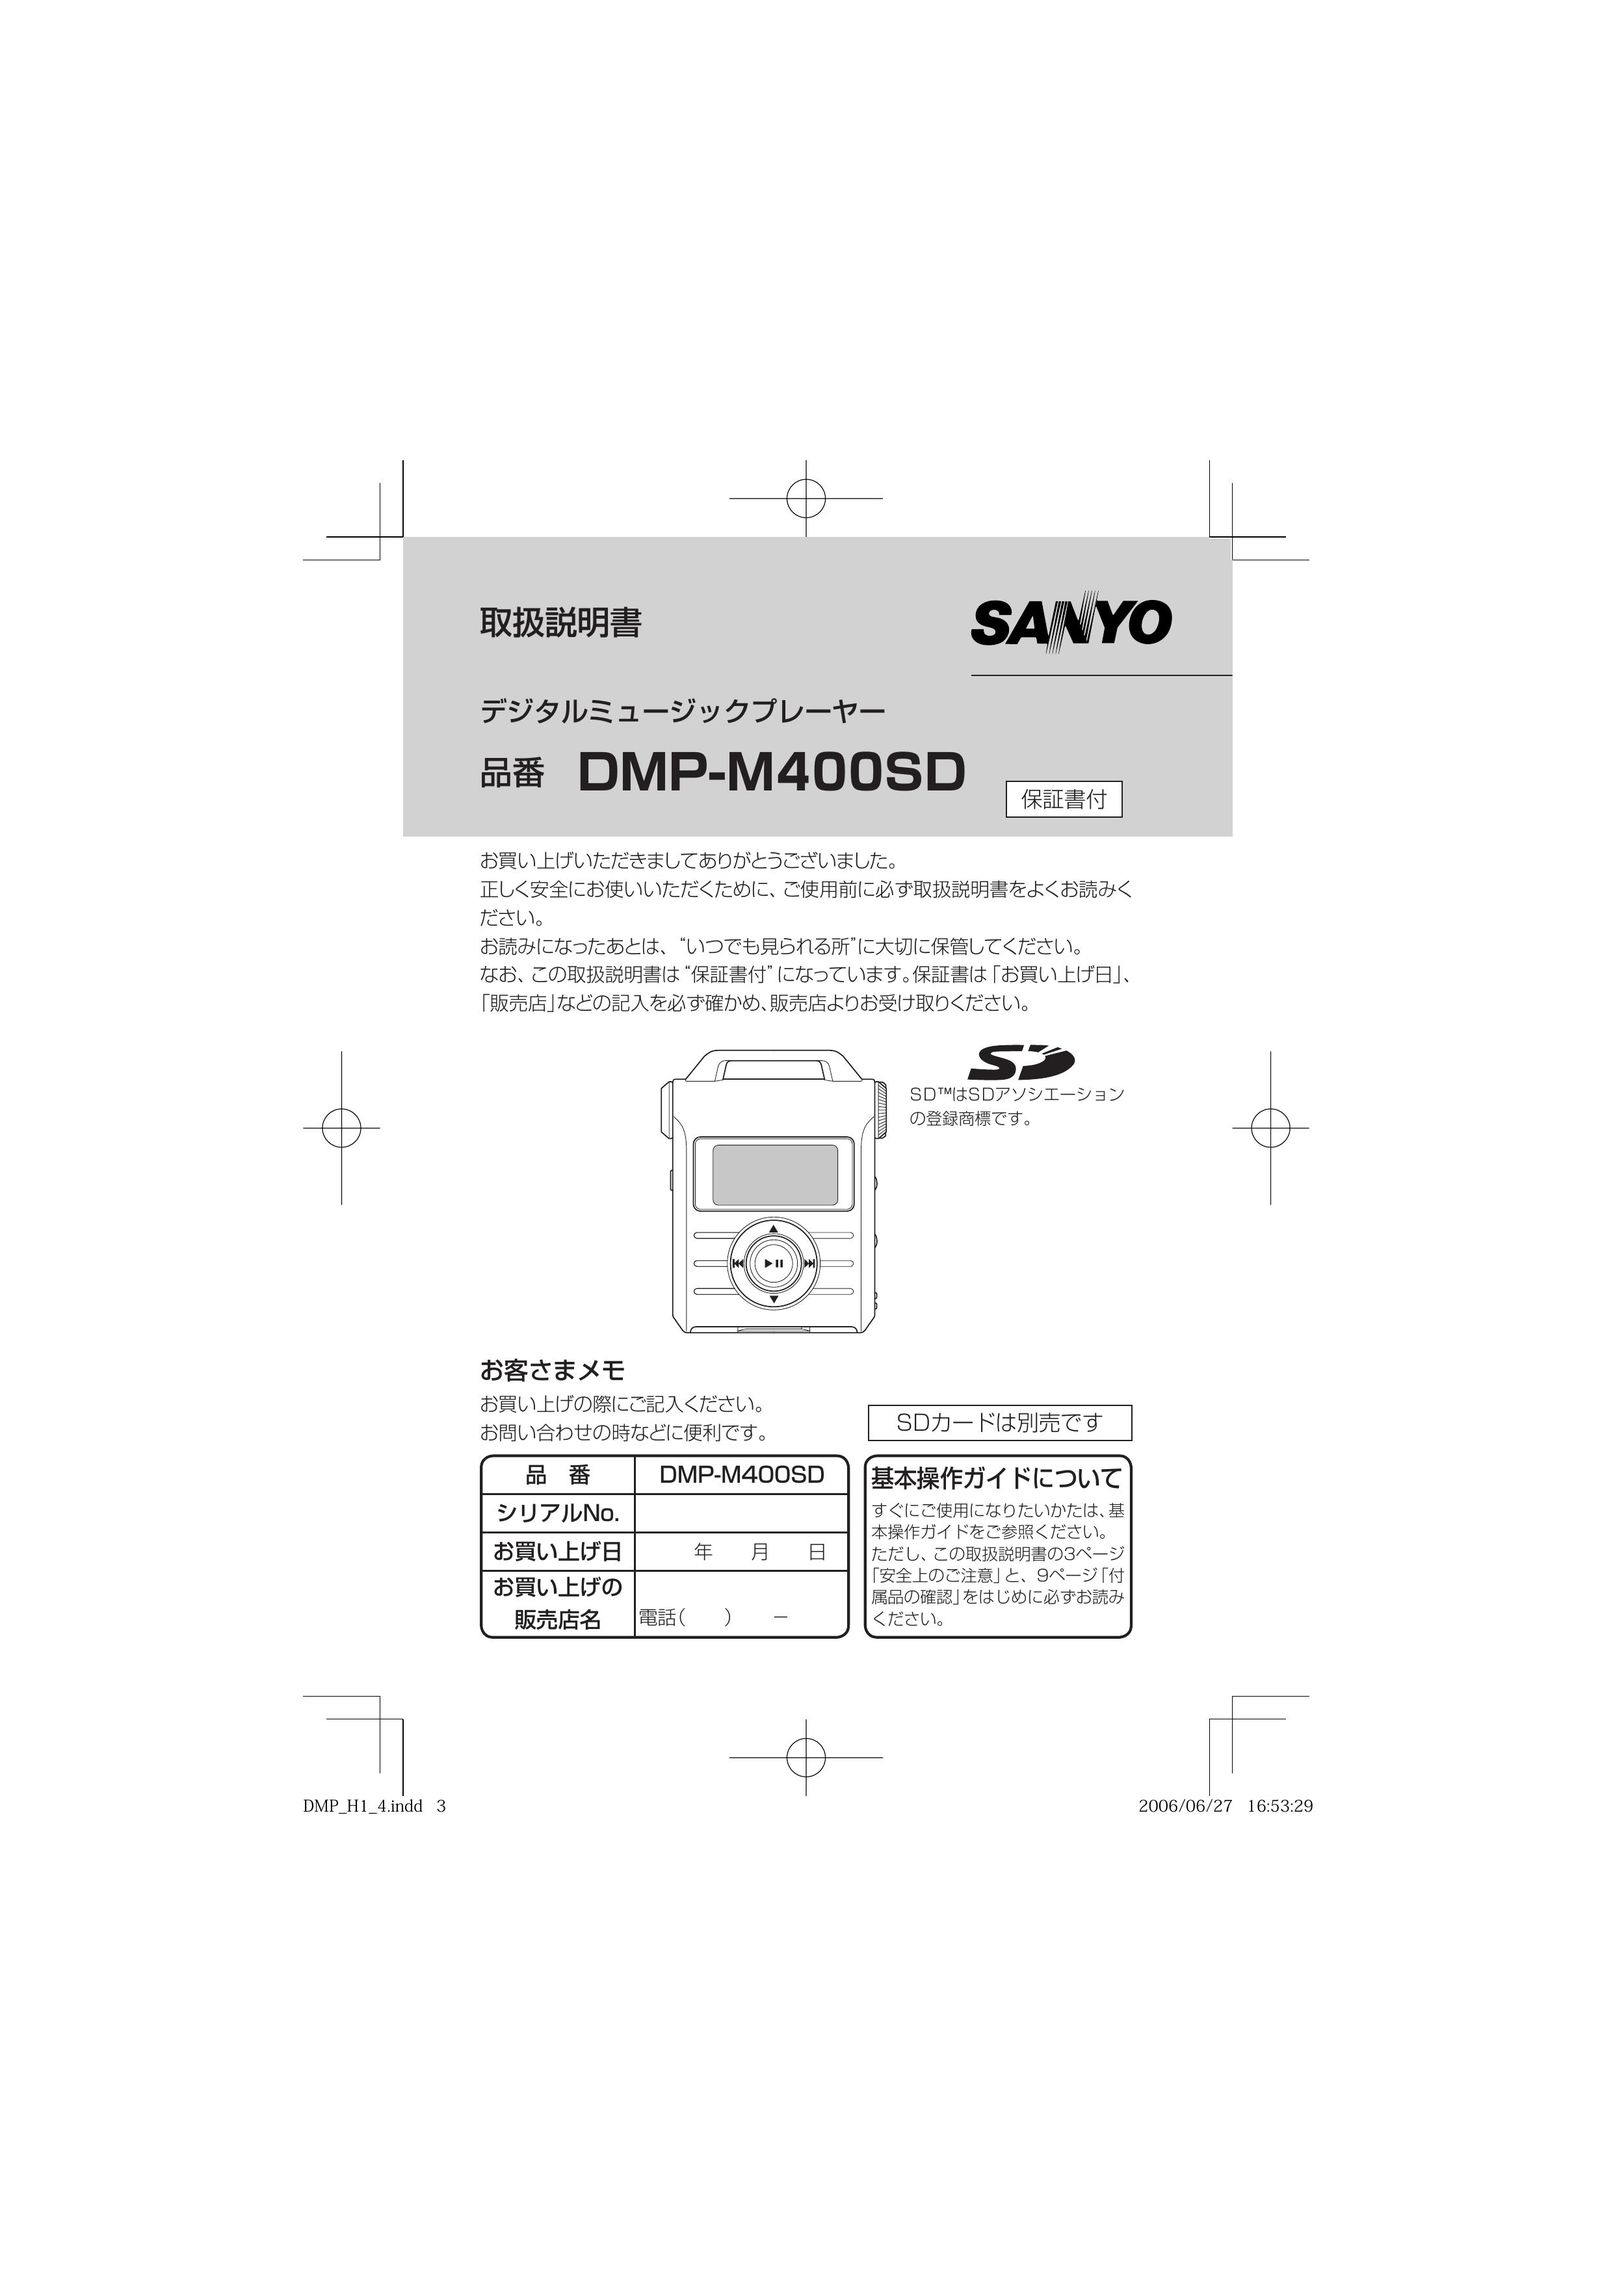 Minox DMP-M400SD MP3 Player User Manual